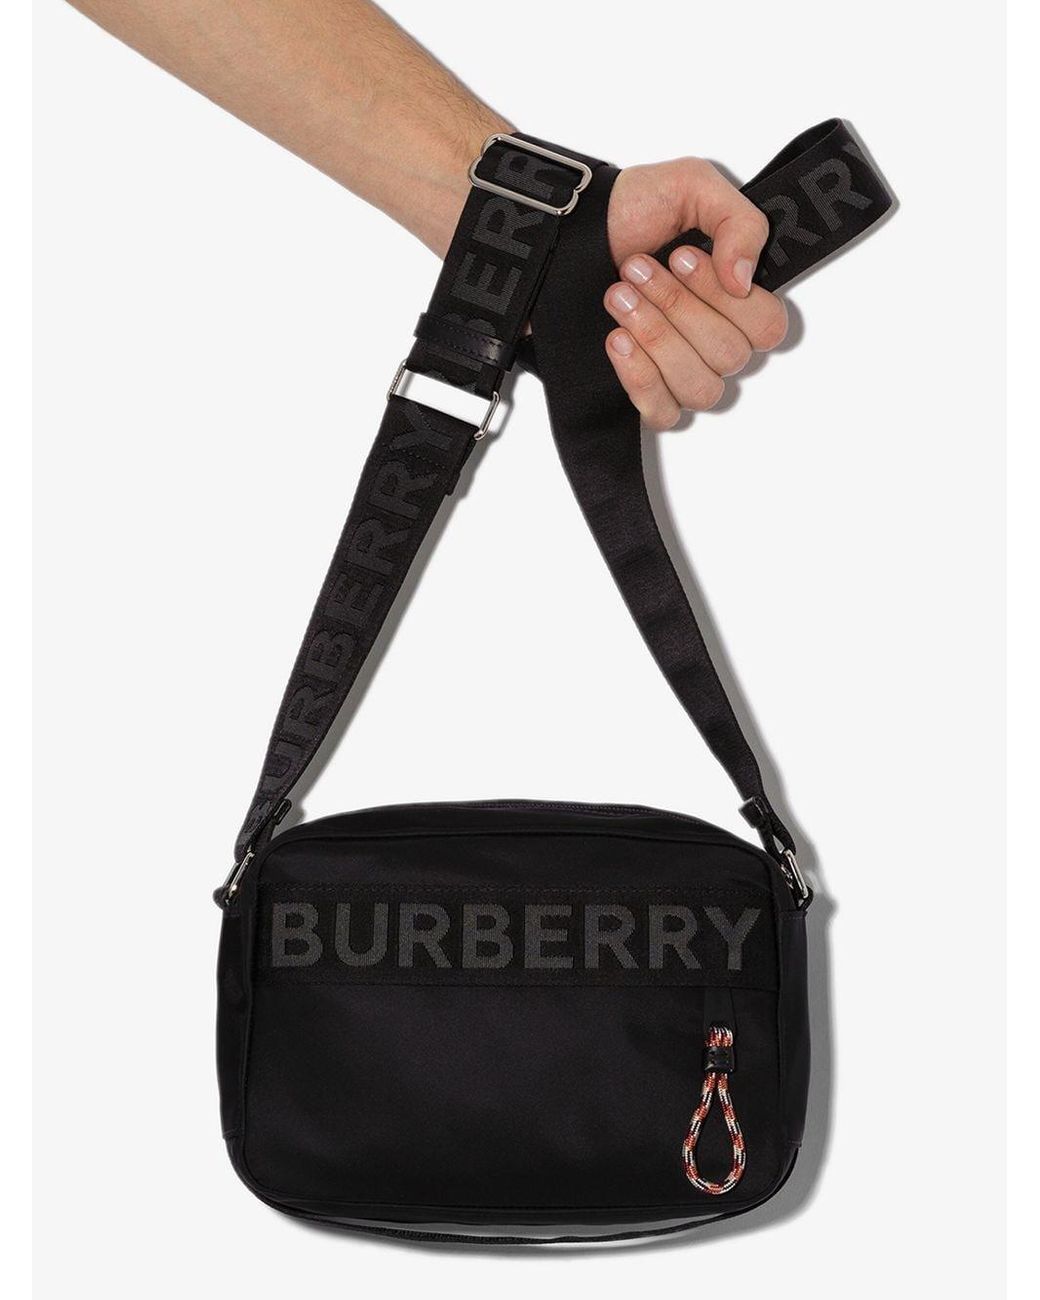 Actualizar 47+ imagen burberry logo crossbody bag - Abzlocal.mx